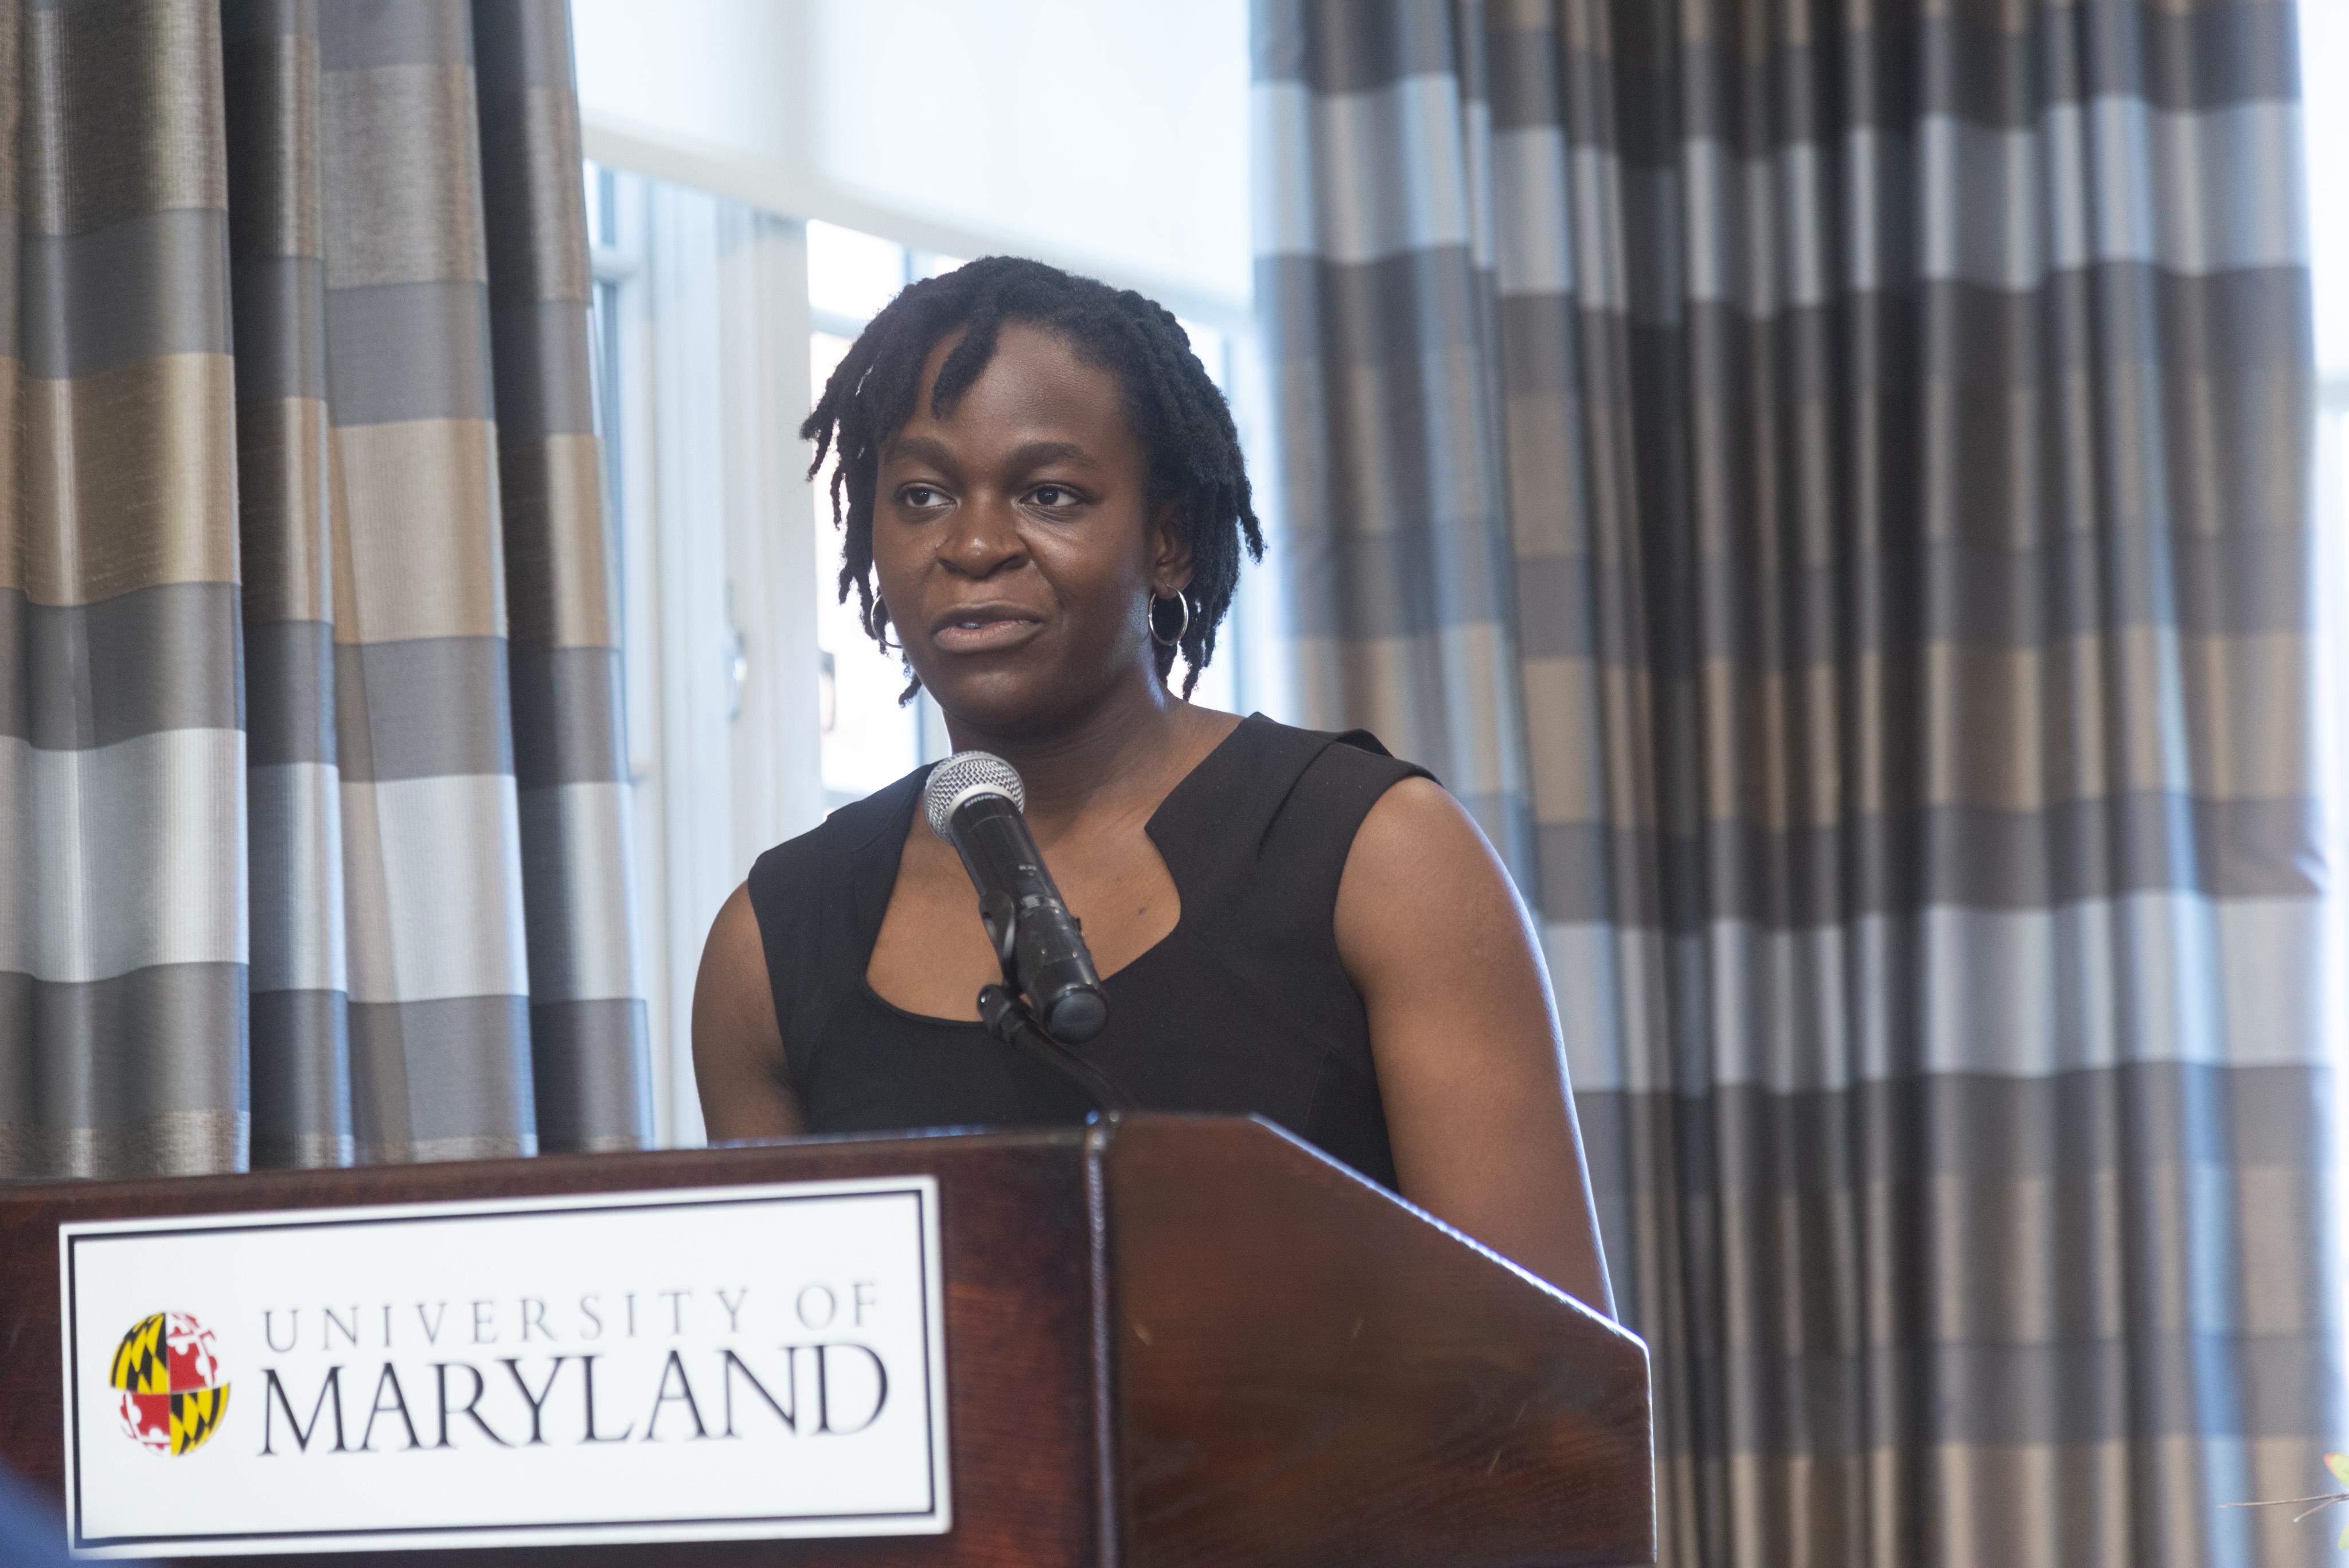 Deborah Omotoso, wearing a black sleeveless dress, speaks at a podium with the University of Maryland name on it.